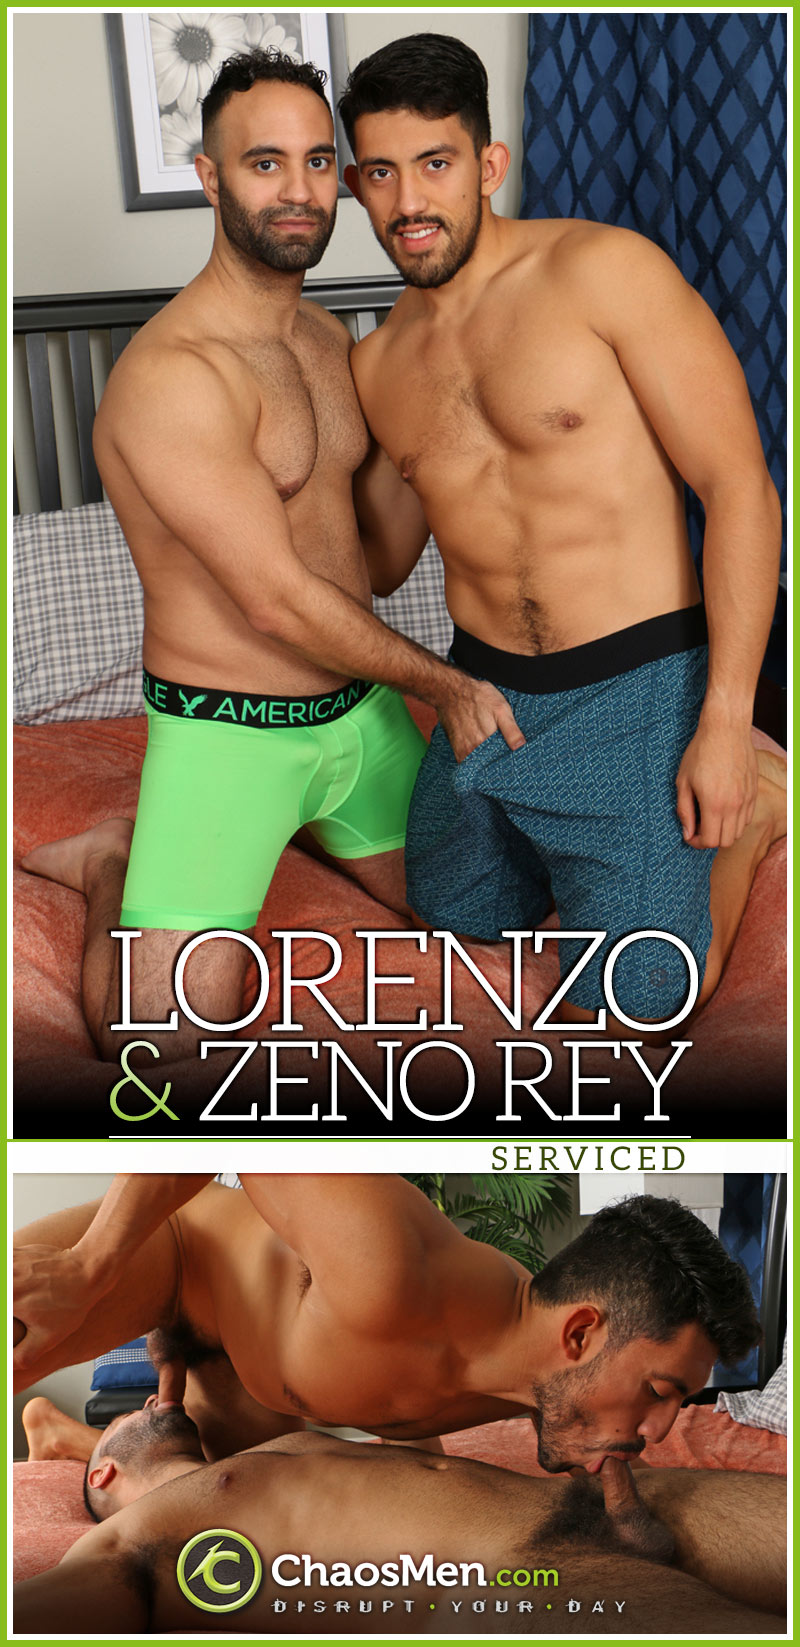 Lorenzo & Zeno Rey 'Serviced' at ChaosMen